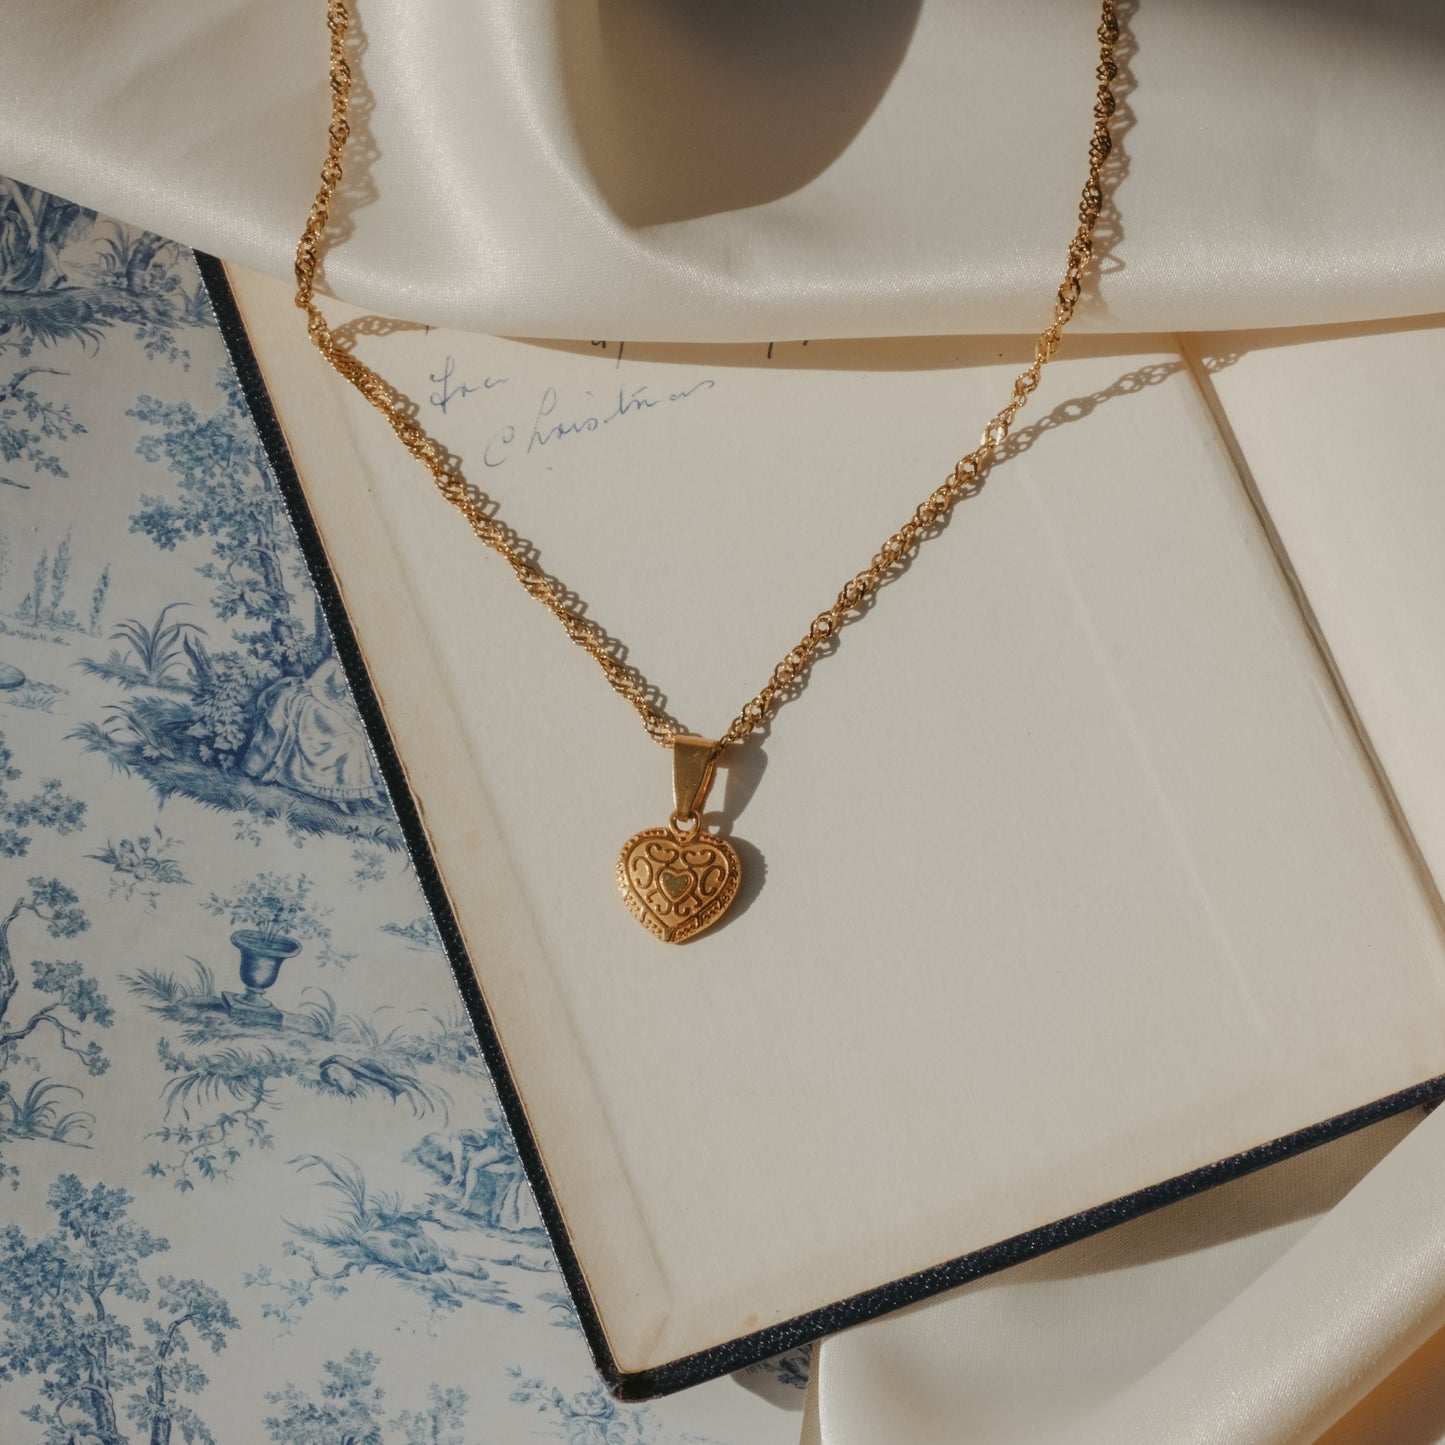 juliet capulet gold heart necklace by london bookish jewellery brand Avery Faye